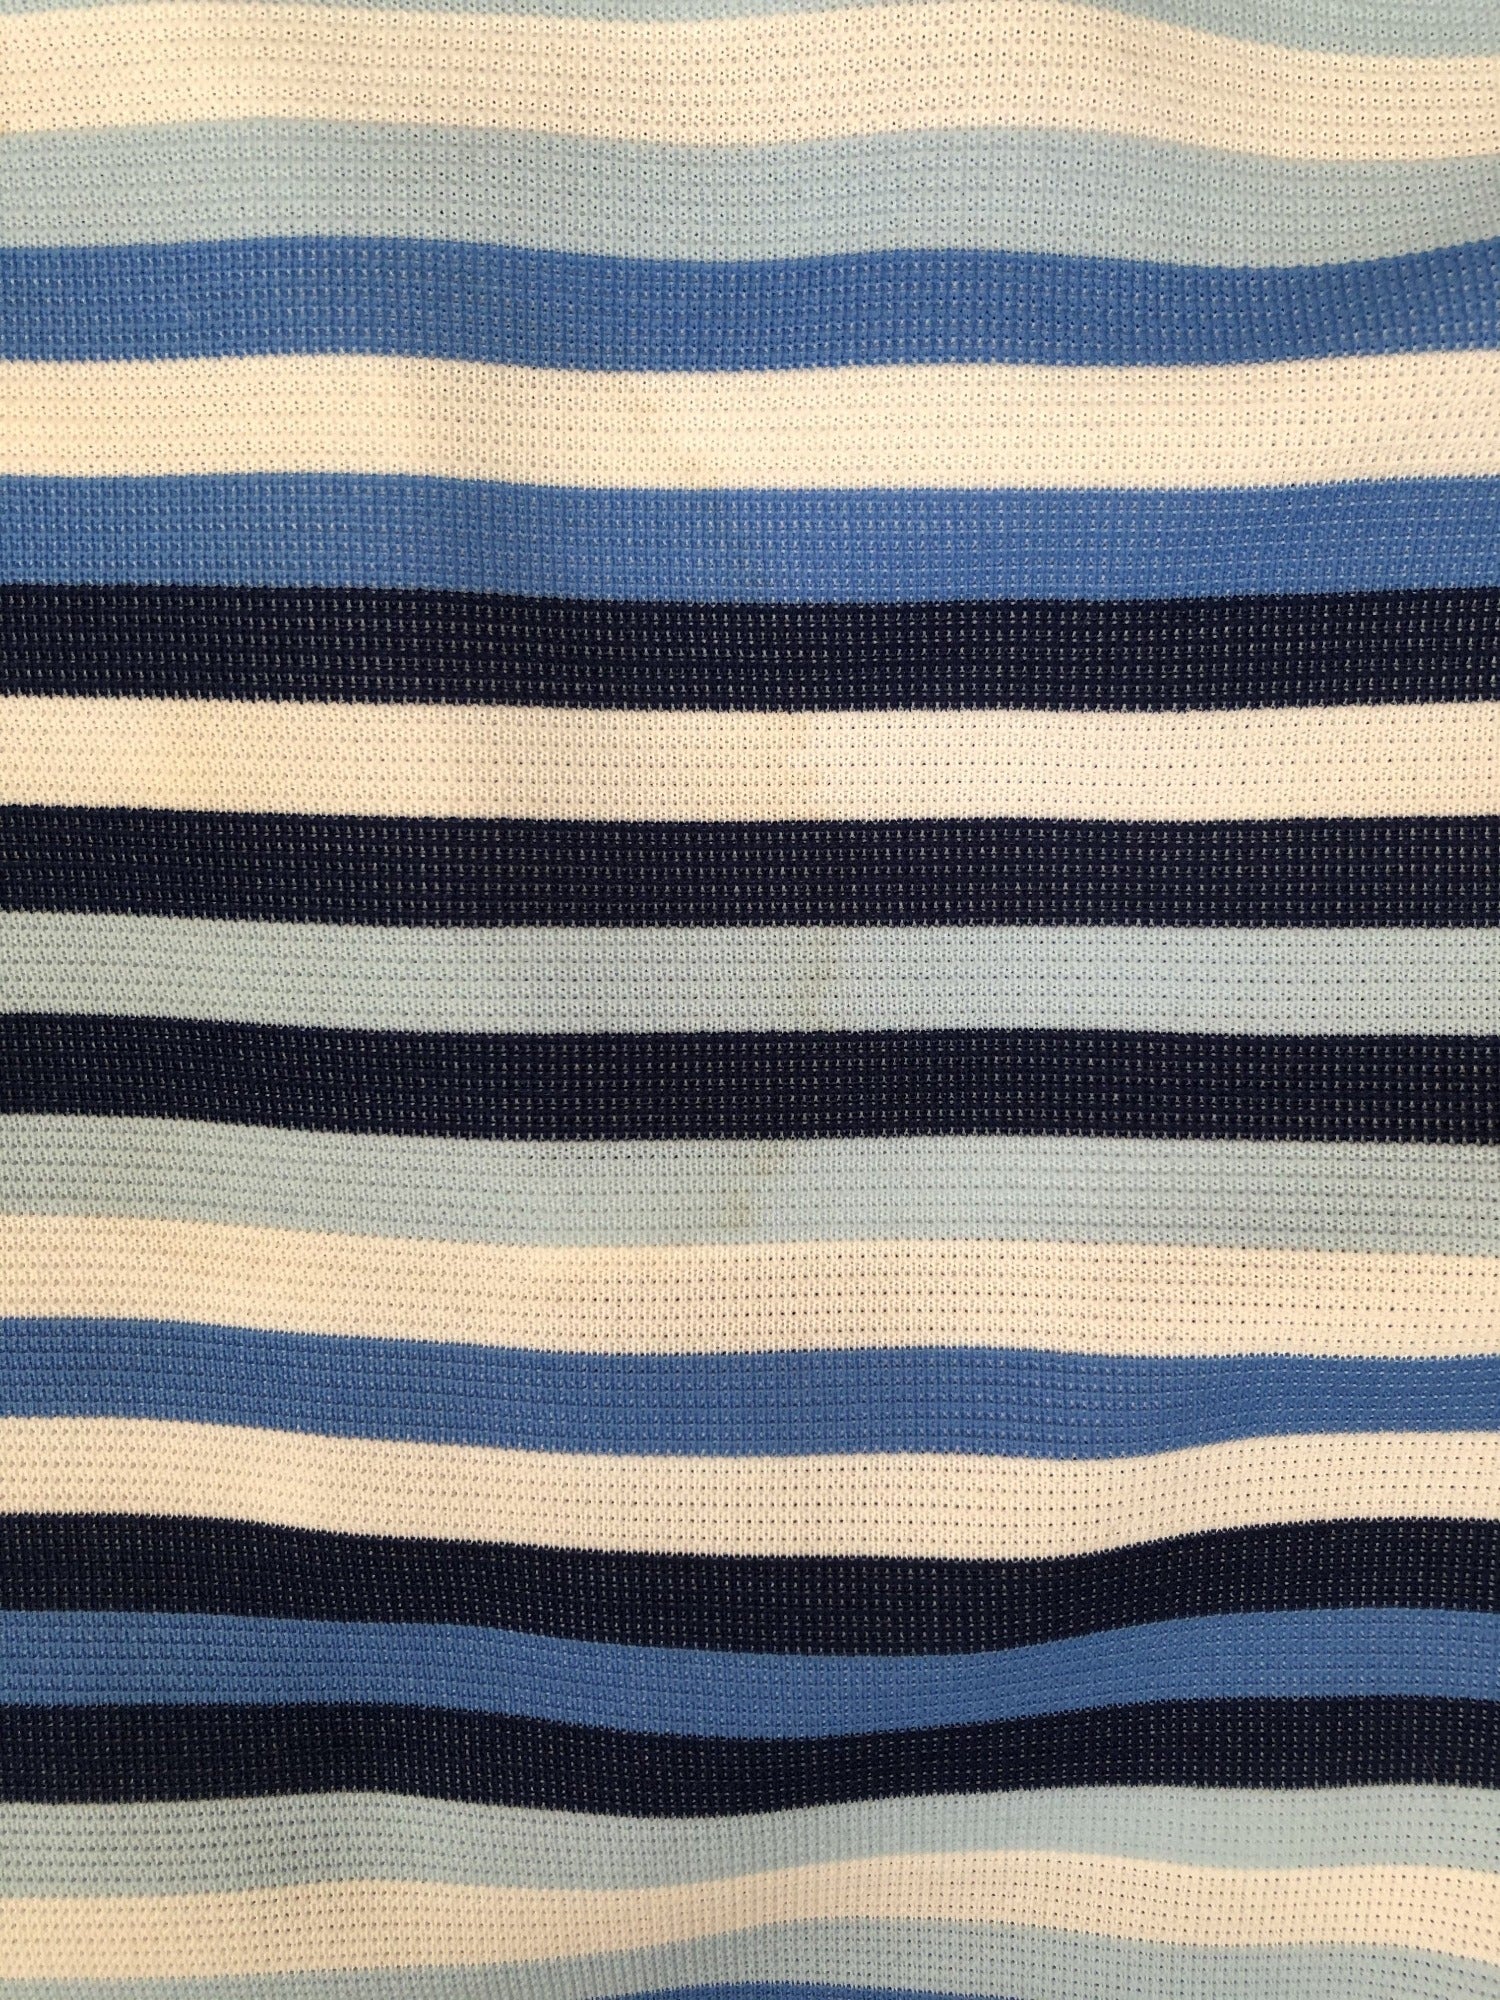 womens  vintage  top  striped  shirt sleeve  retro  Blue  blouse  70s  60s  1970s  1960s  12/14 Urban Village Vintage